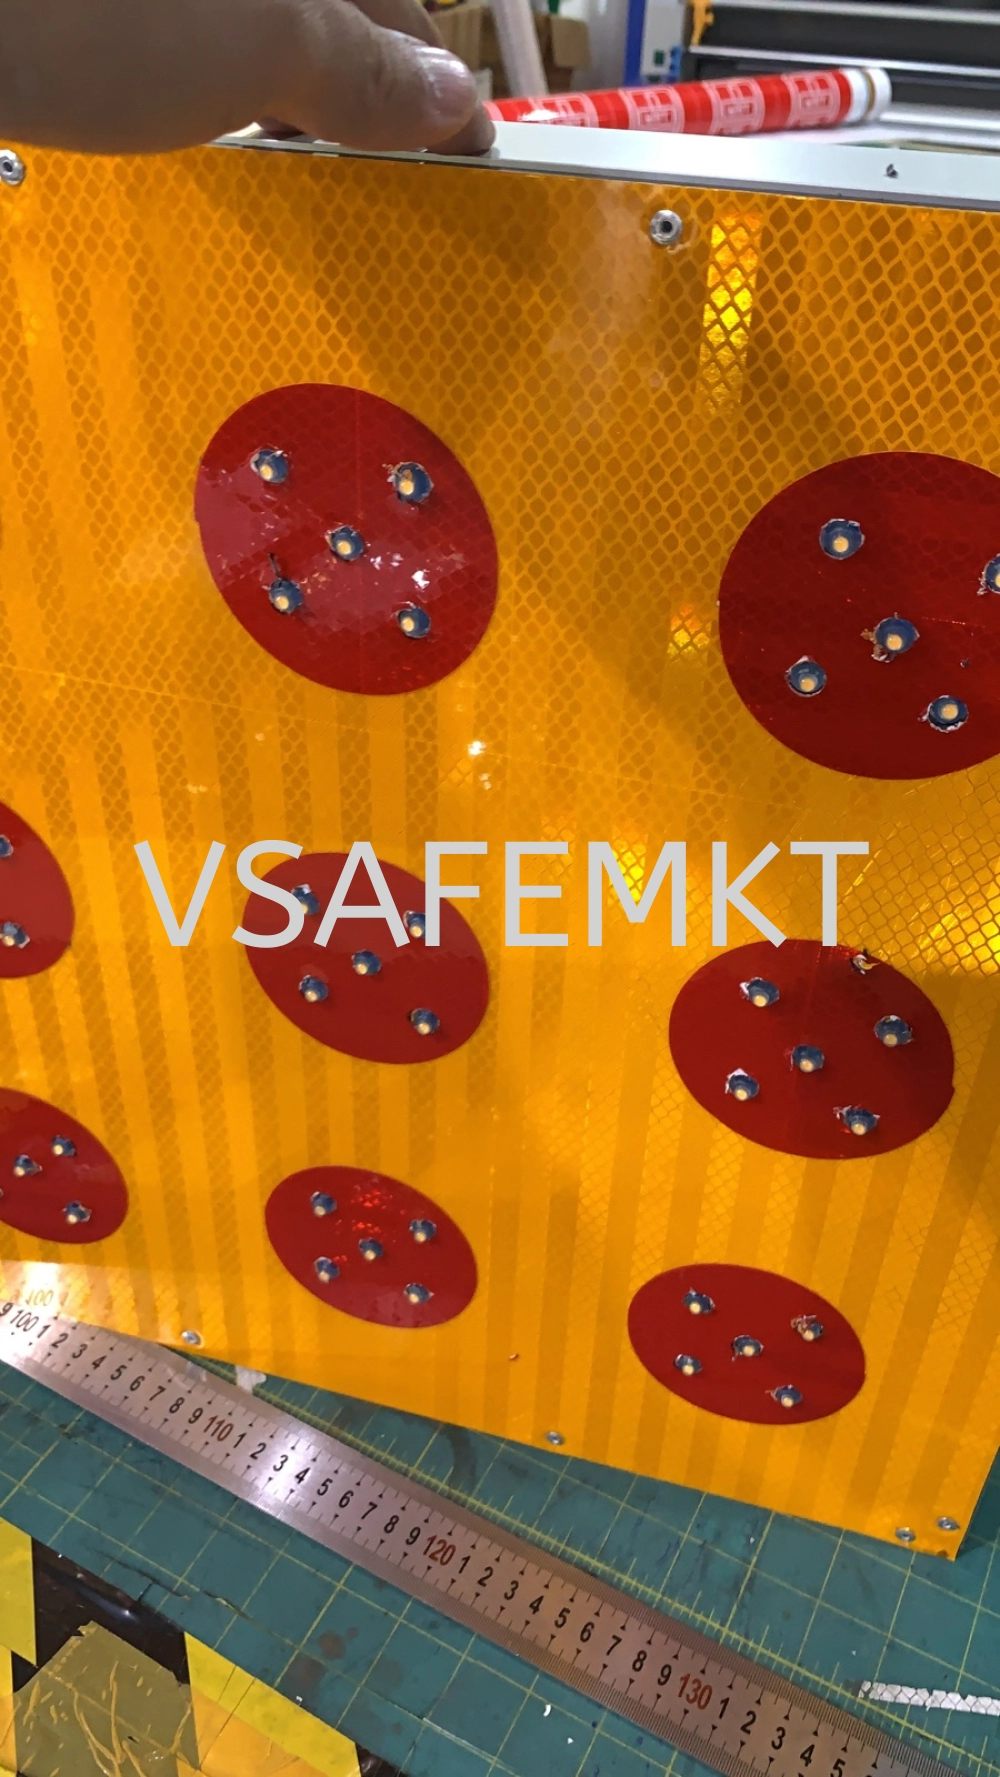 VSAFEMKT JKR LED WD.23 obstruction Signage 600 X 600mm 45 Pcs LED With Solar Panel Build In Lithium Battery